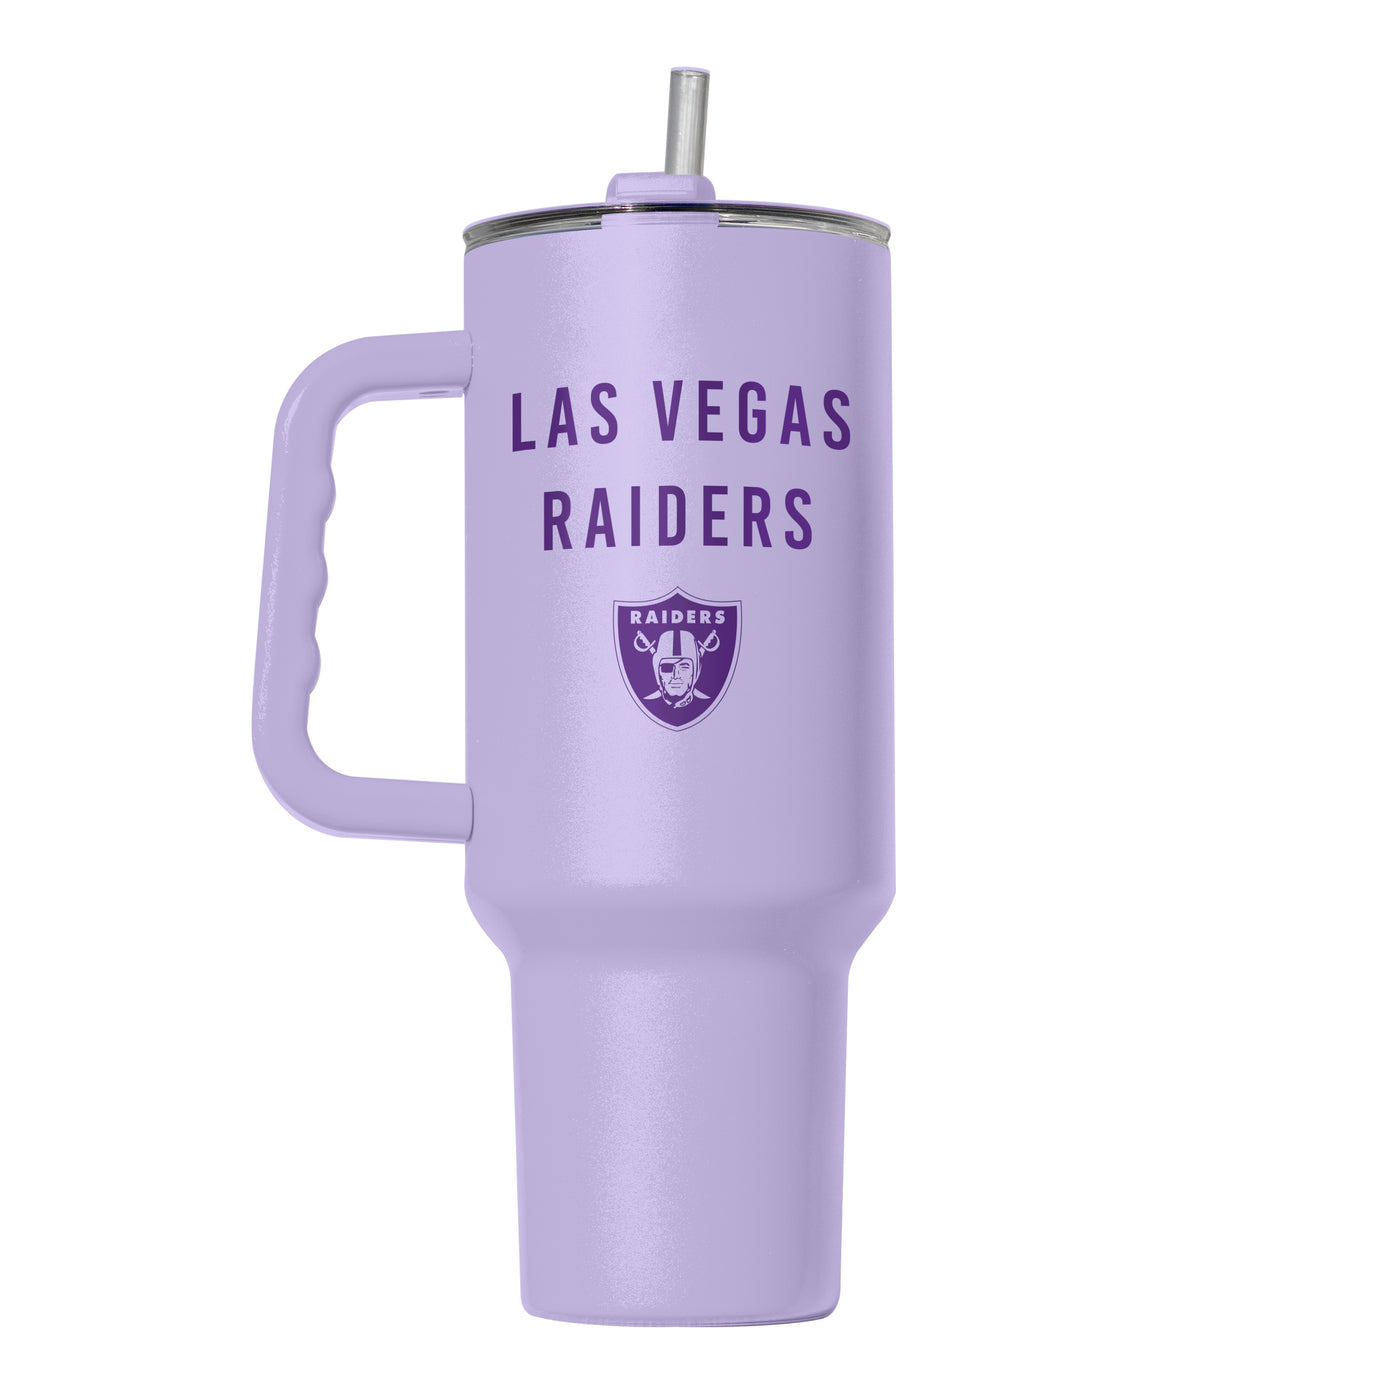 Las Vegas Raiders 40oz Tonal Lavender Powder Coat Tumbler